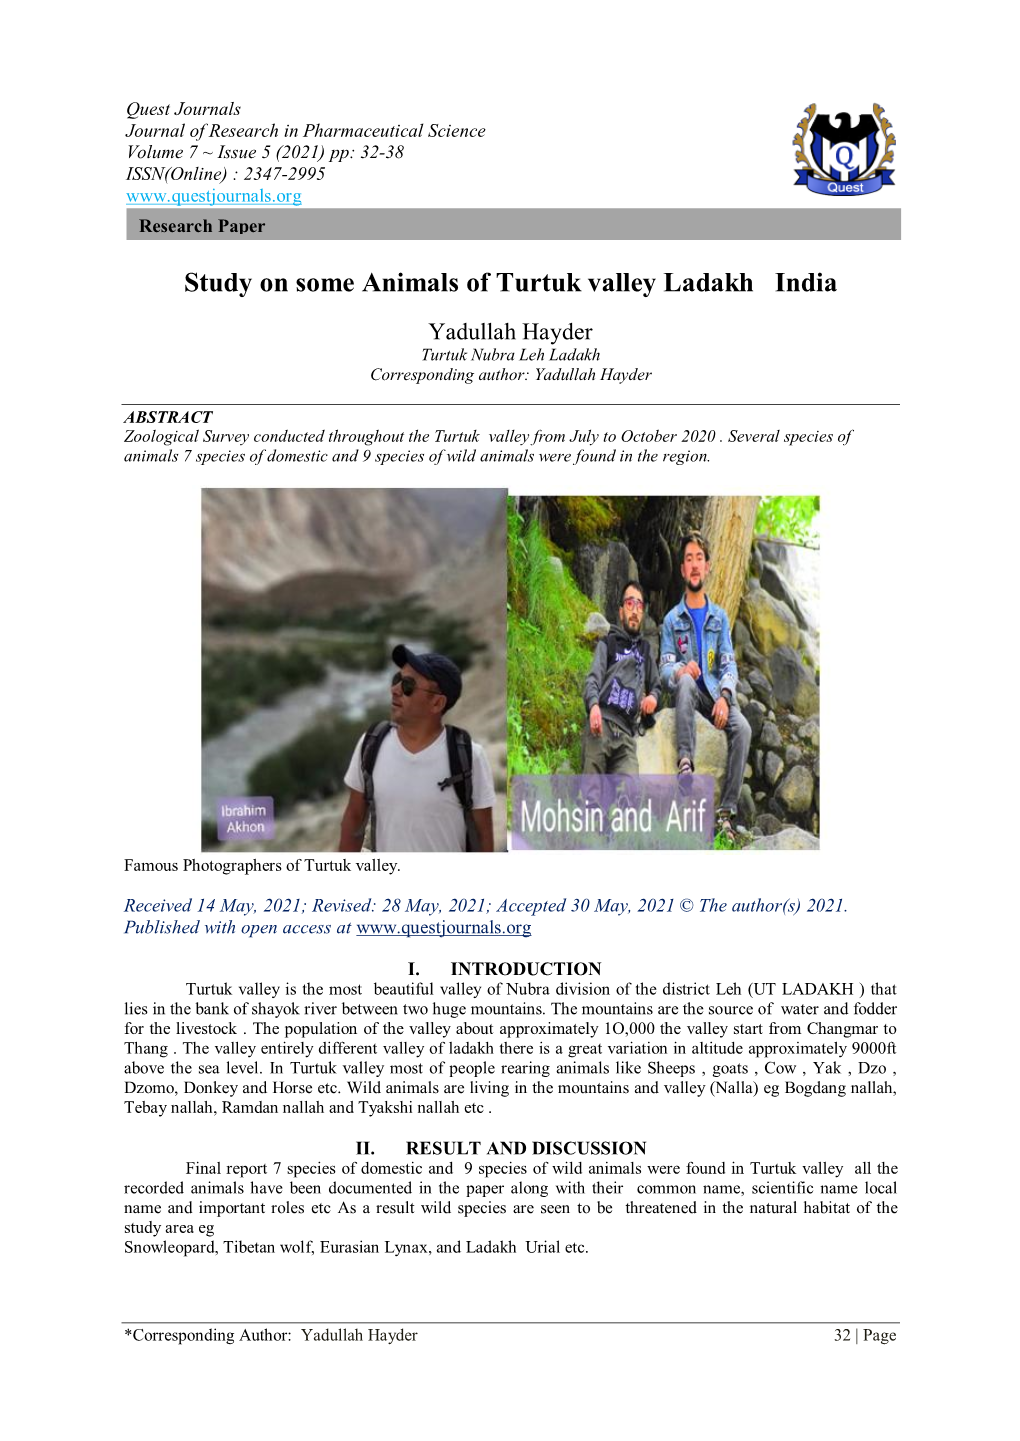 Study on Some Animals of Turtuk Valley Ladakh India